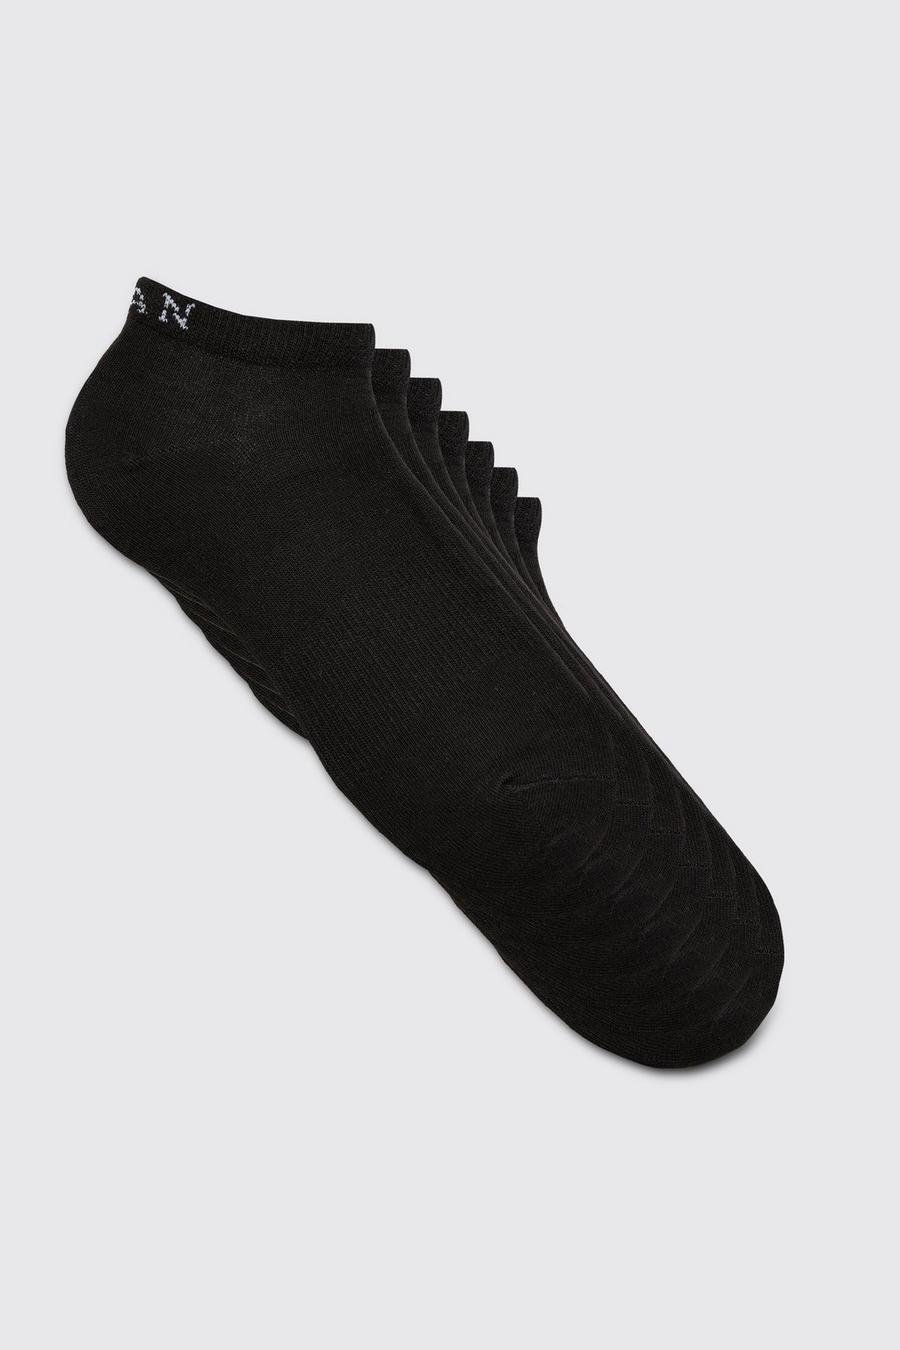 Pack de 7 pares de calcetines MAN deportivos, Black image number 1